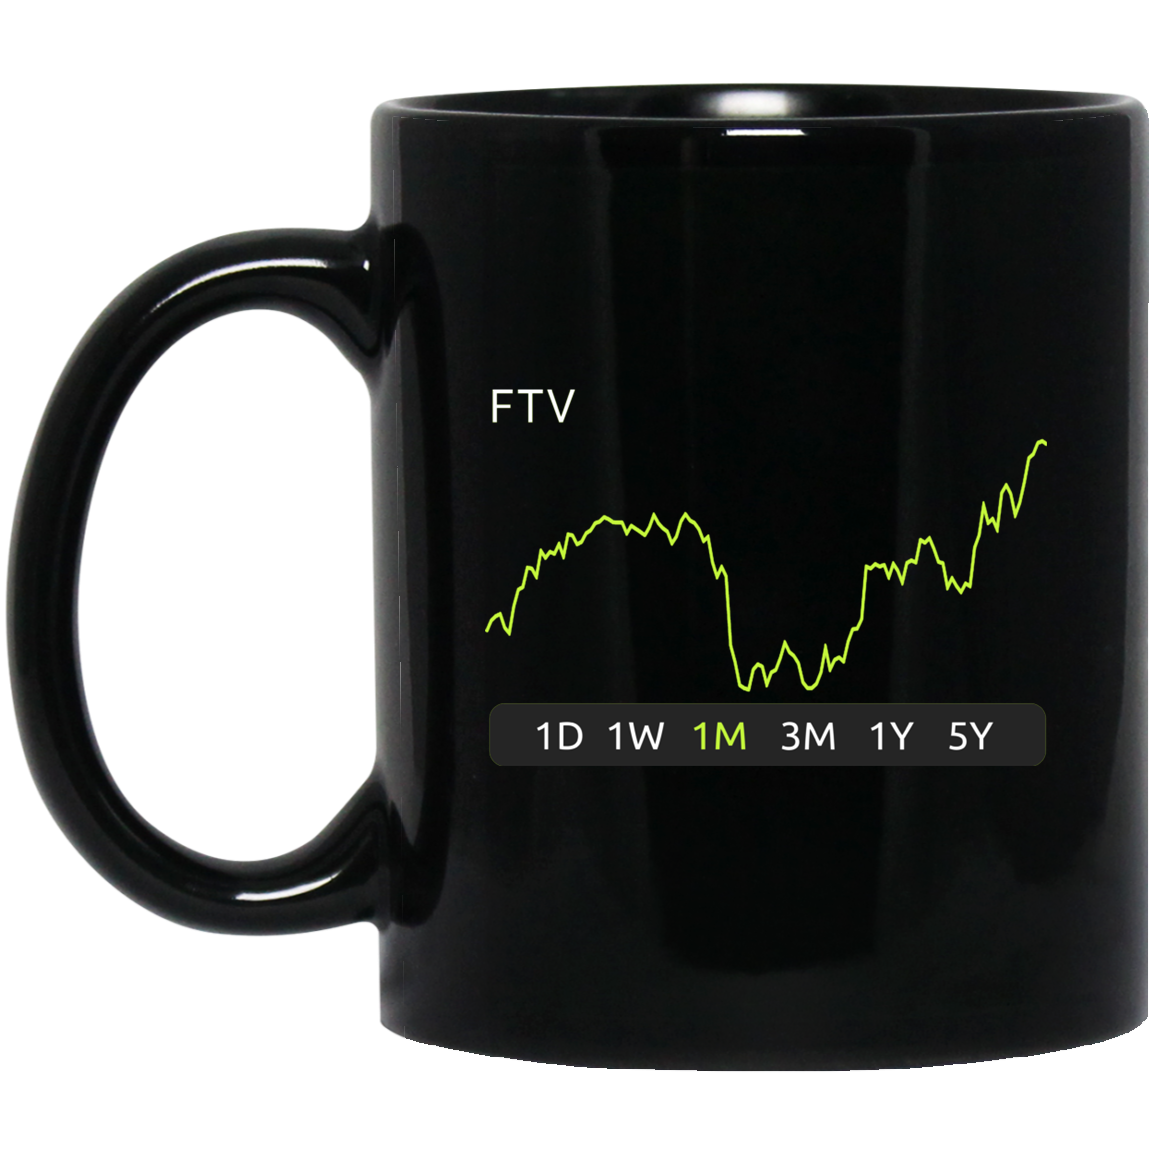 FTV Stock 1m Mug